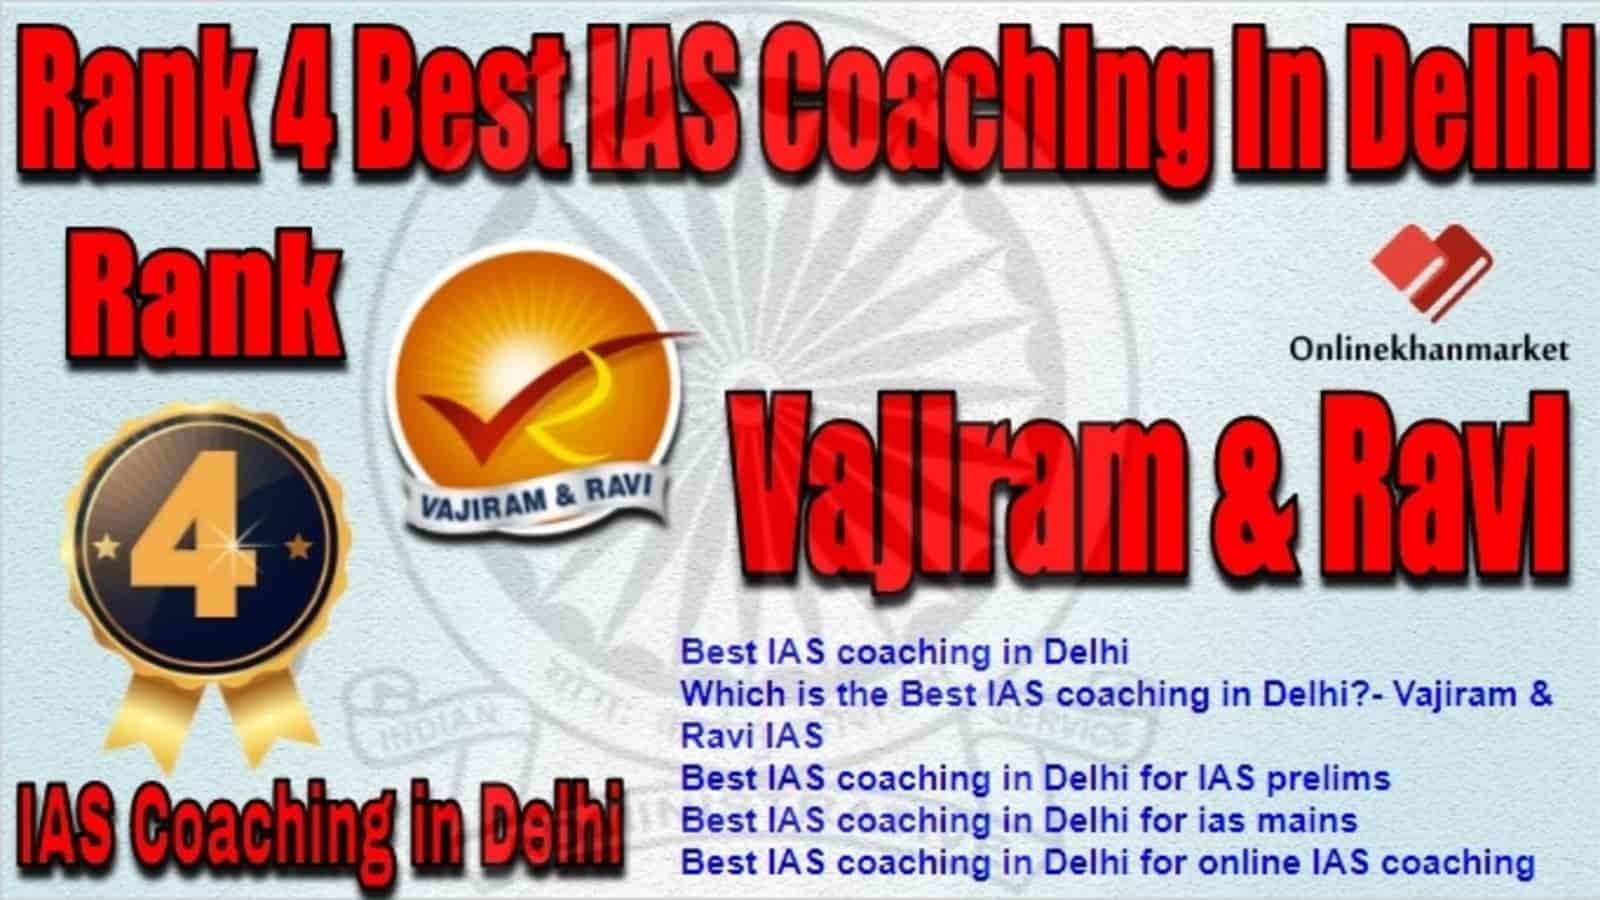 Rank 4 Best IAS Coaching in Delhi